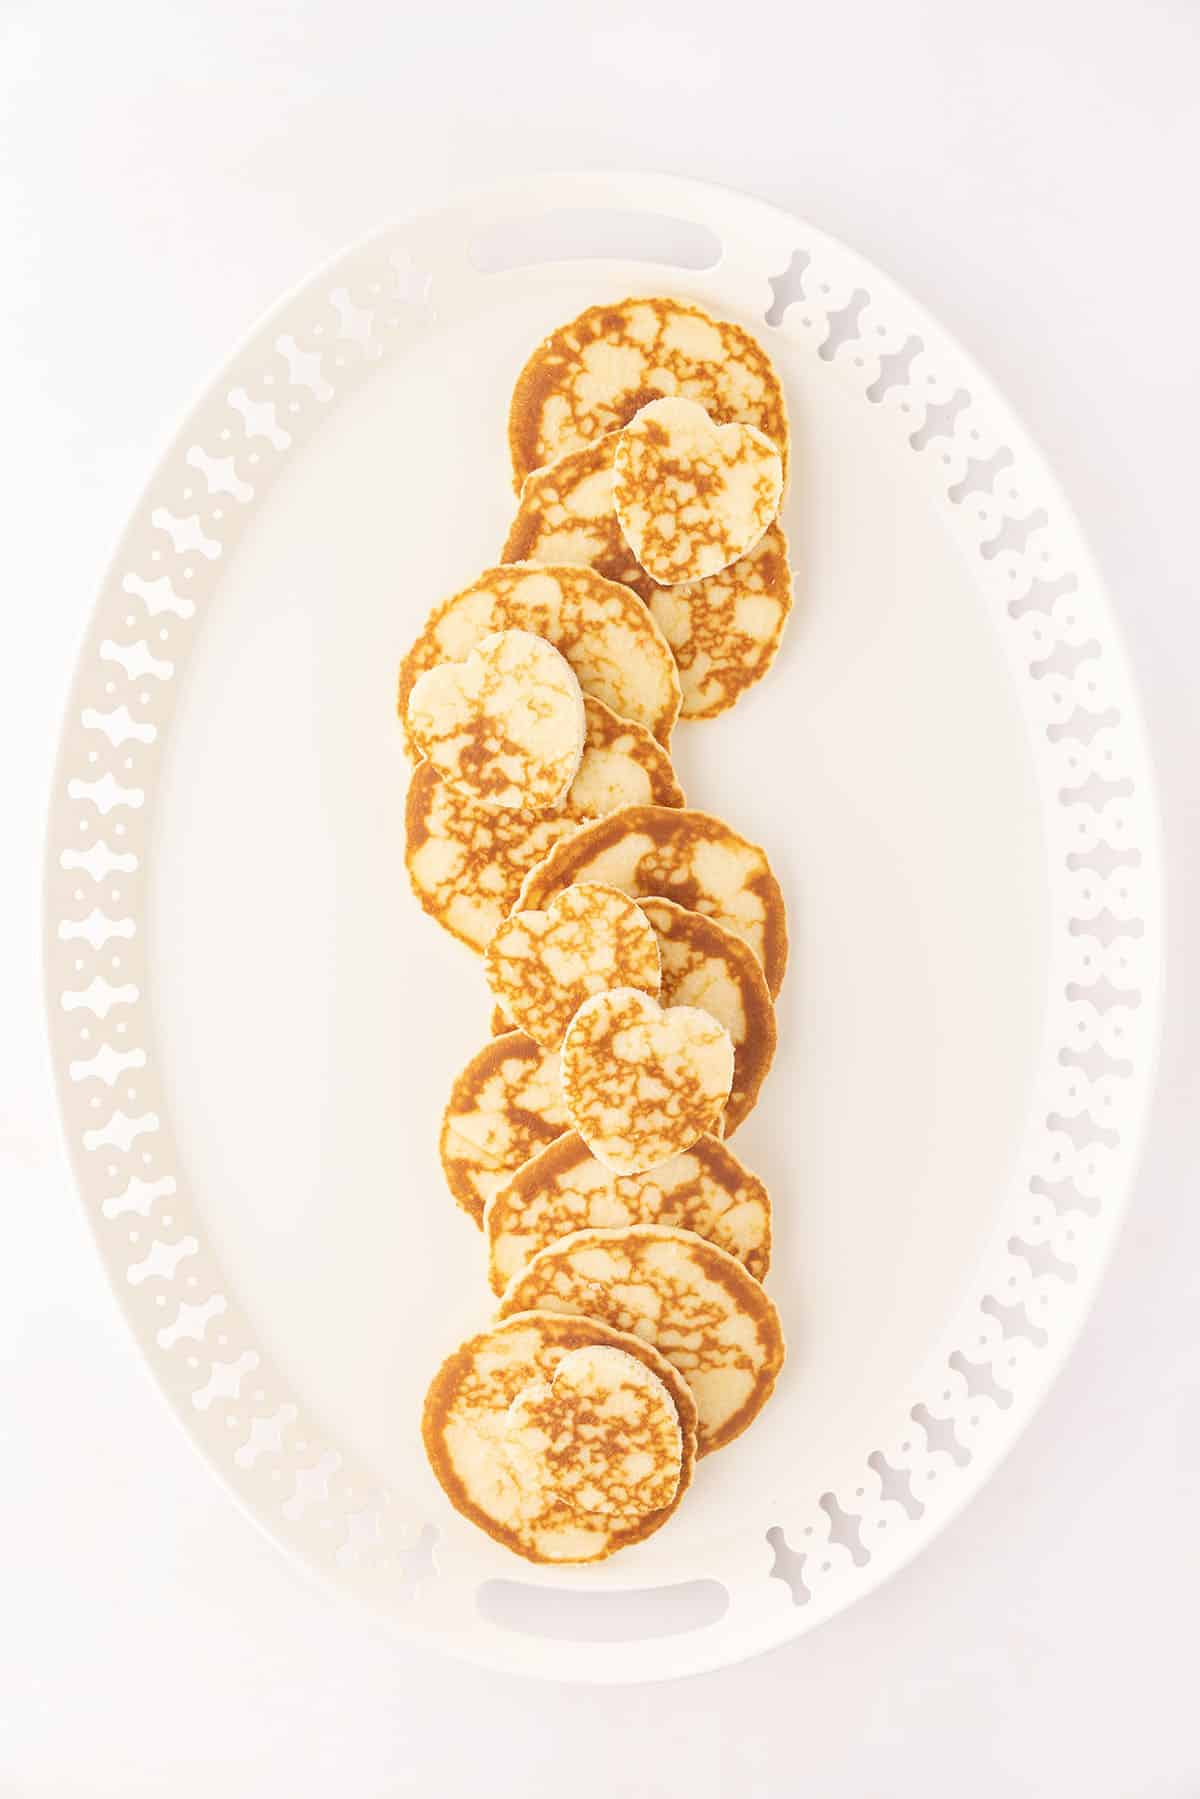 Mini pancakes on a white plate.